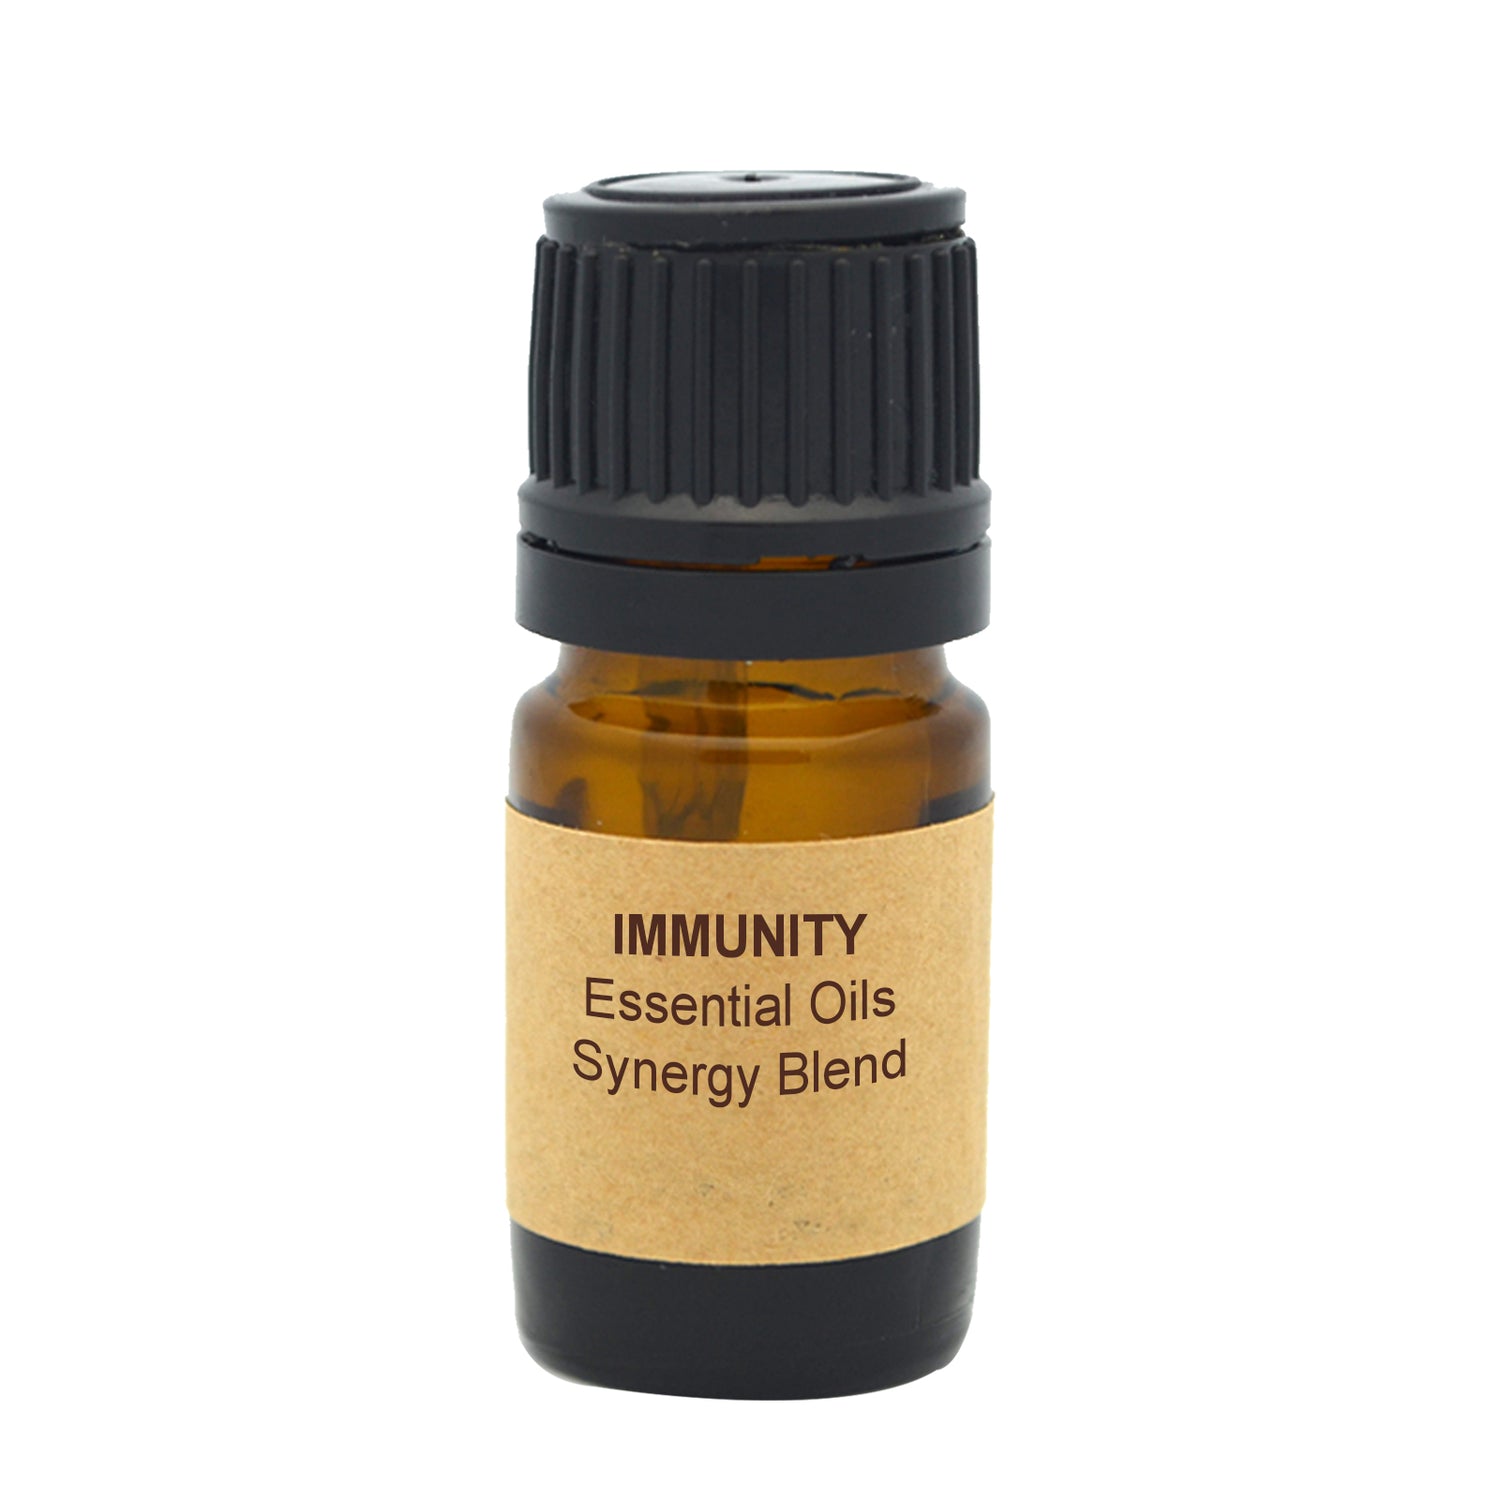 Immunity Essential Oils Synergy Blend.